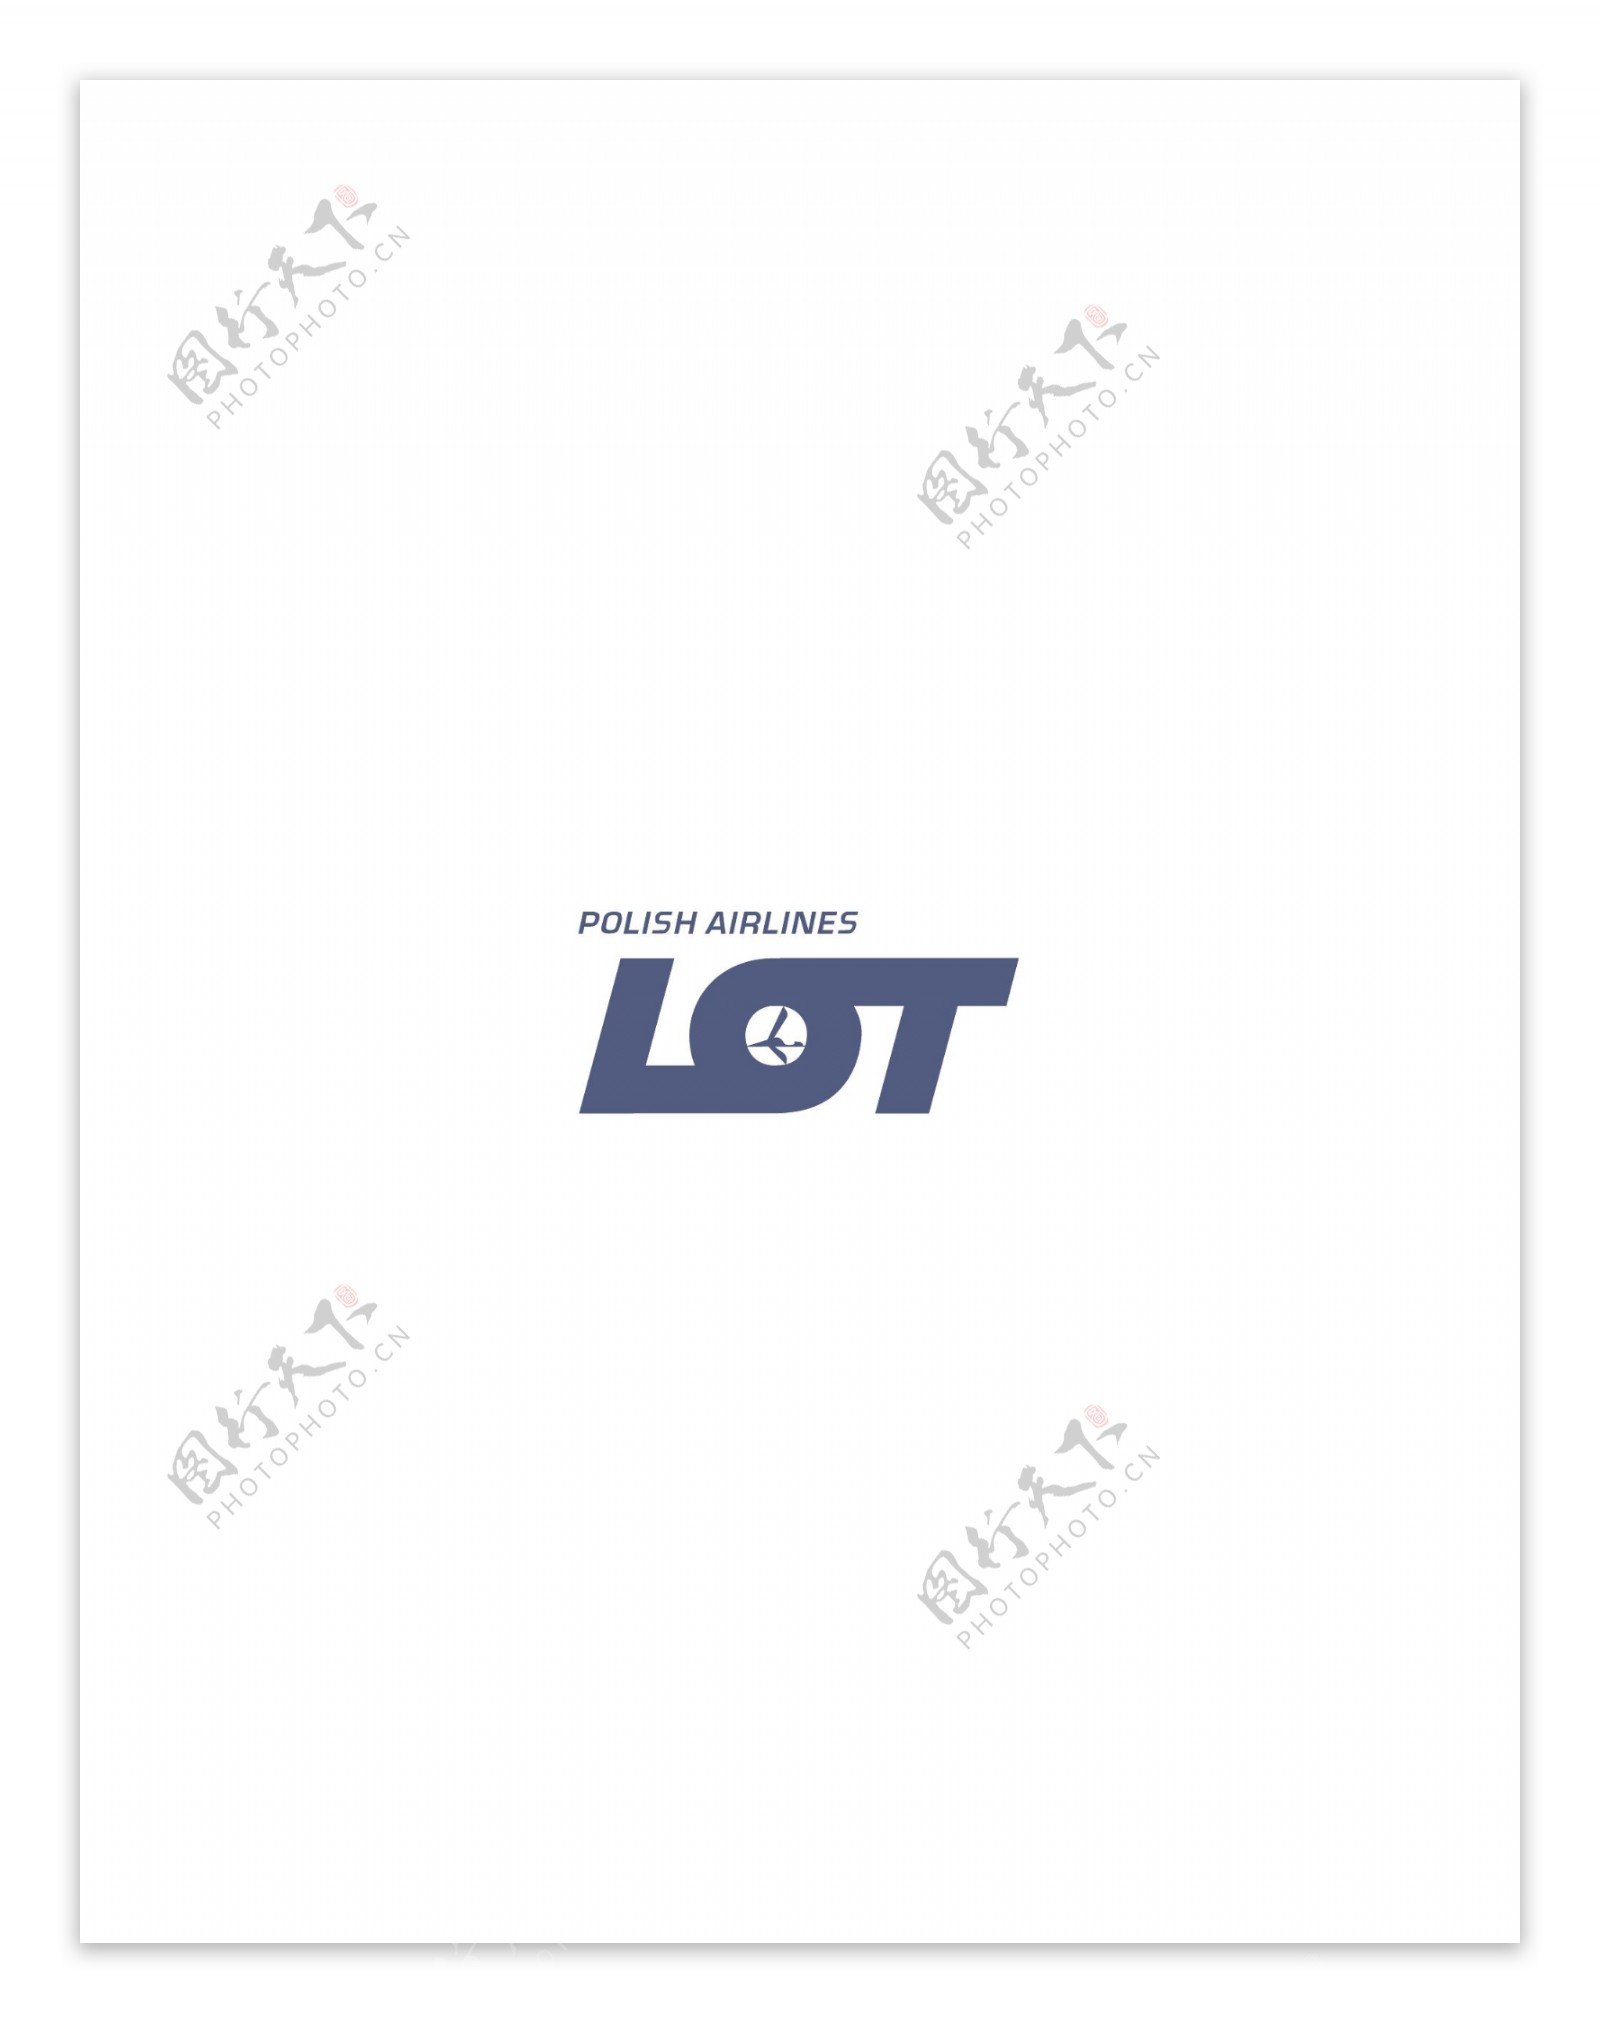 LOT1logo设计欣赏LOT1民航业标志下载标志设计欣赏